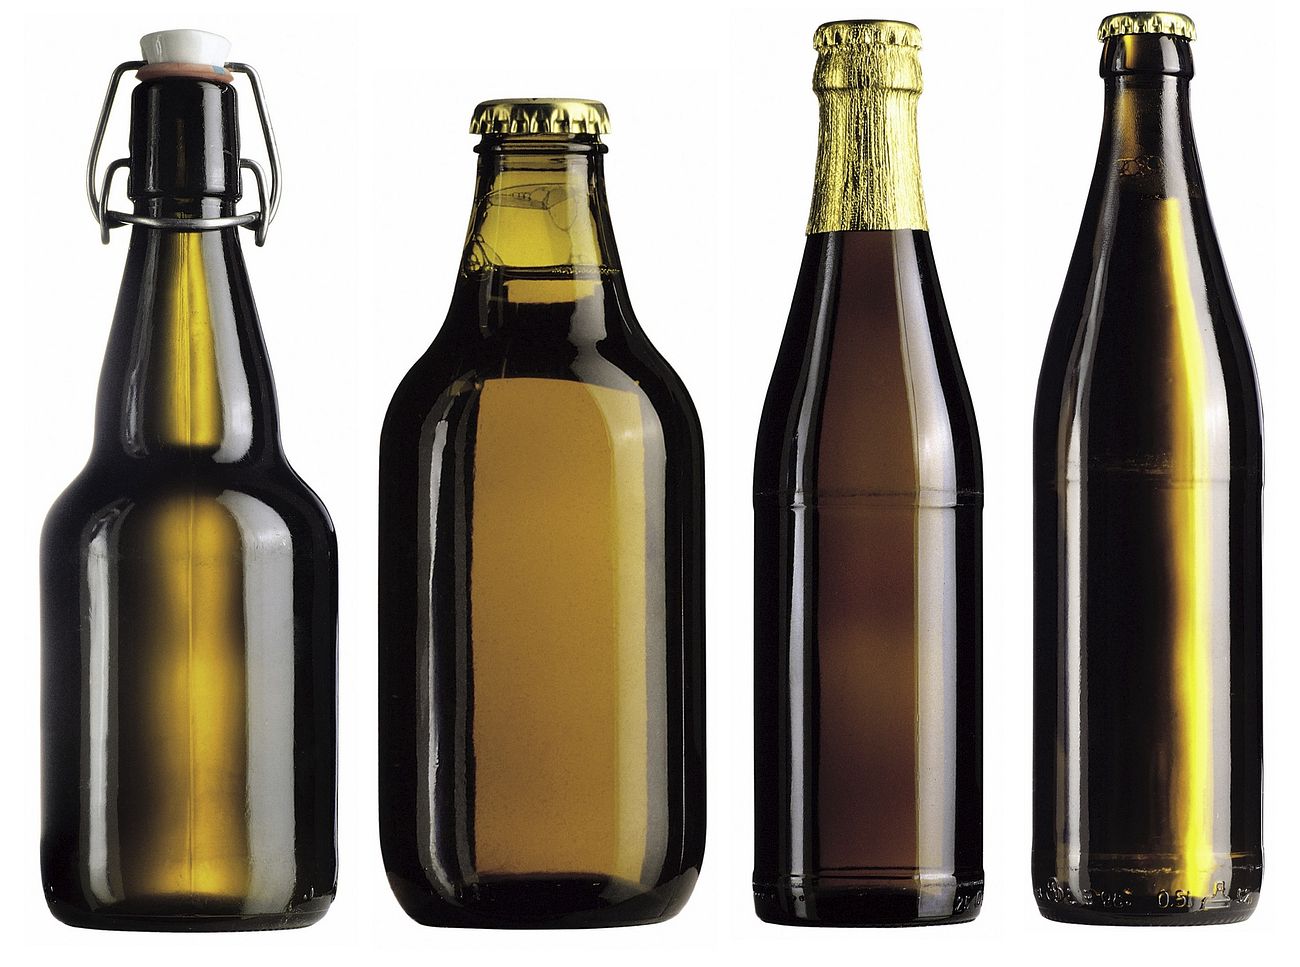 Free beer bottles image